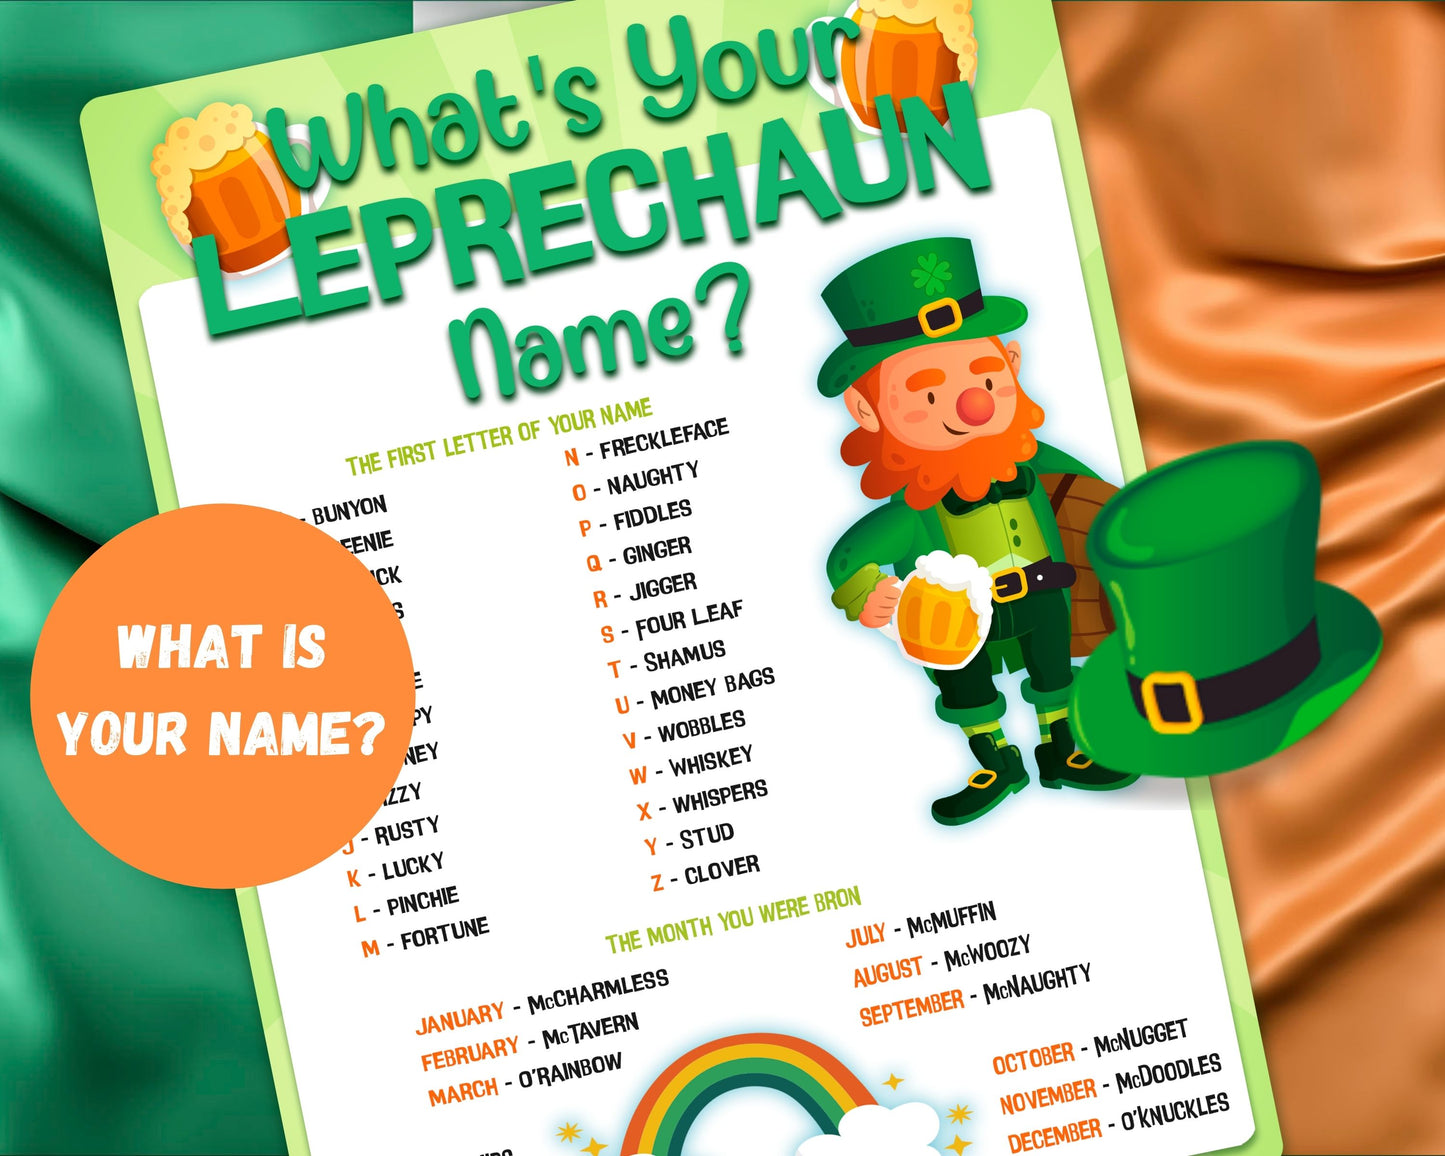 What's Your Leprechaun Name?